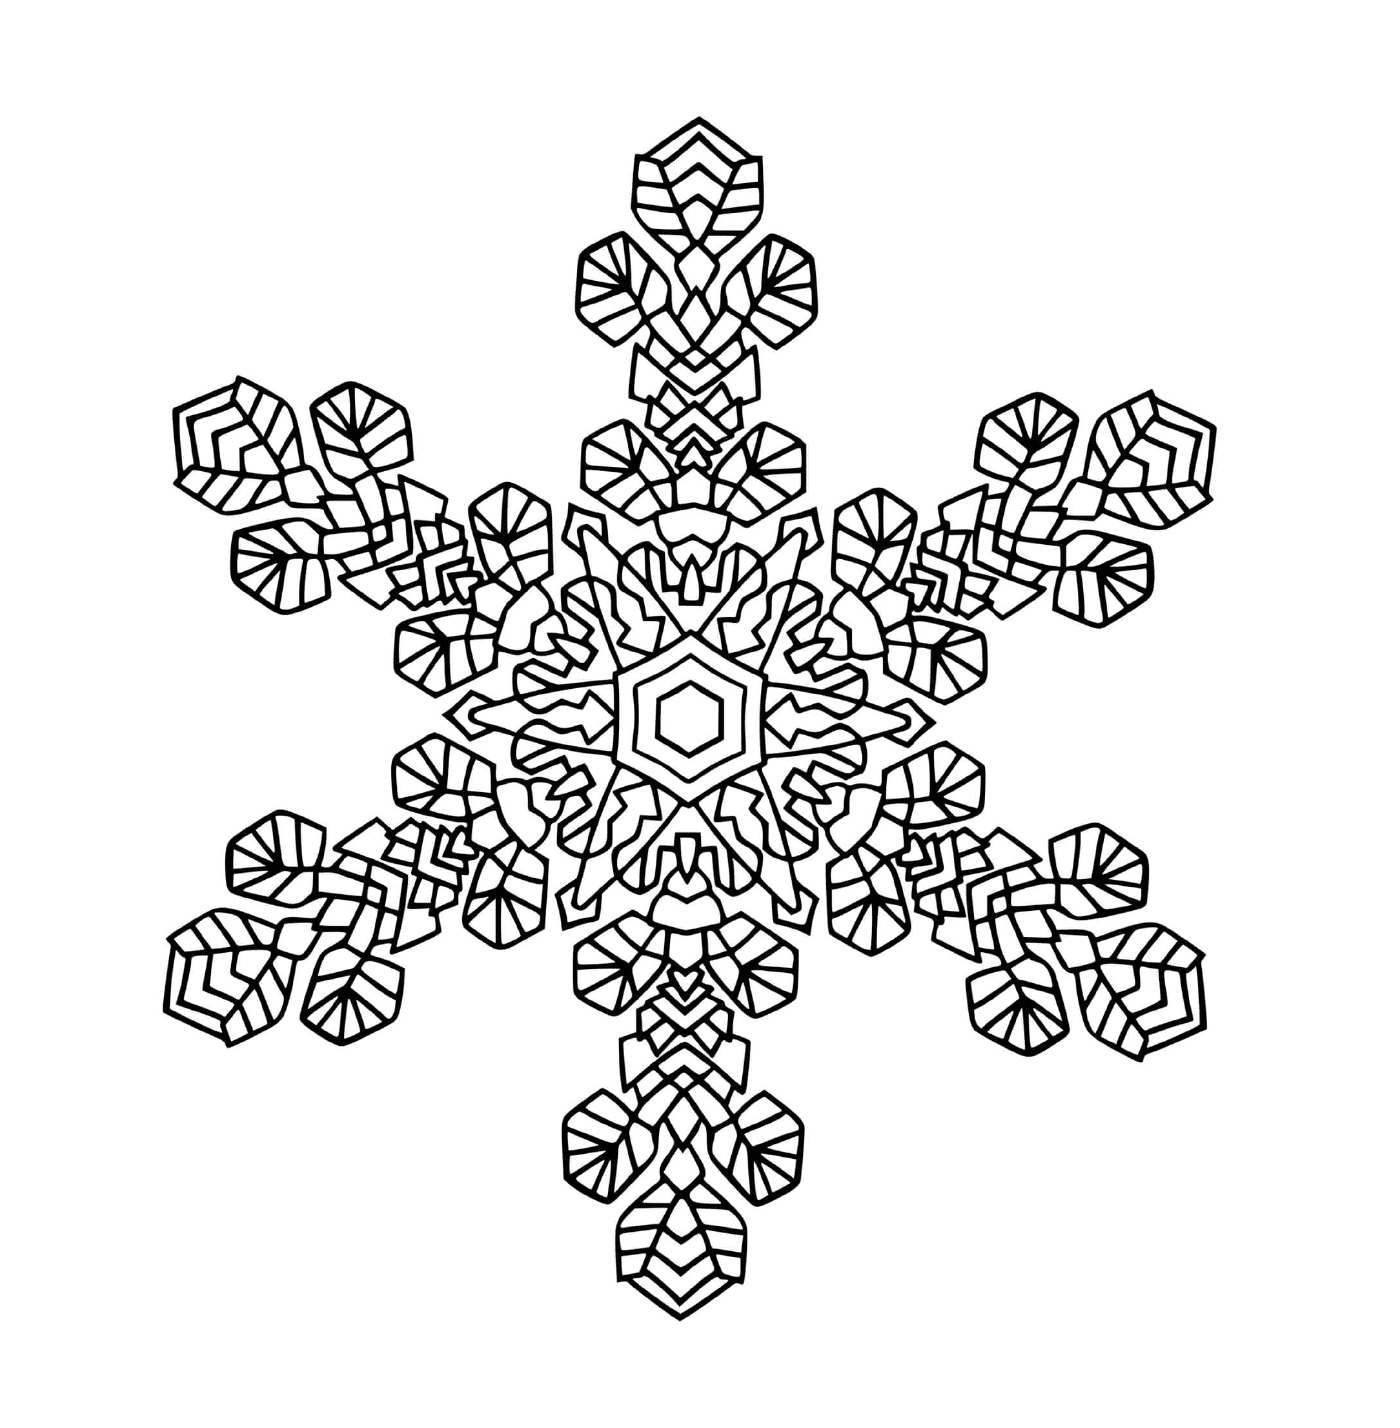  A beautiful snowflake in mandala 